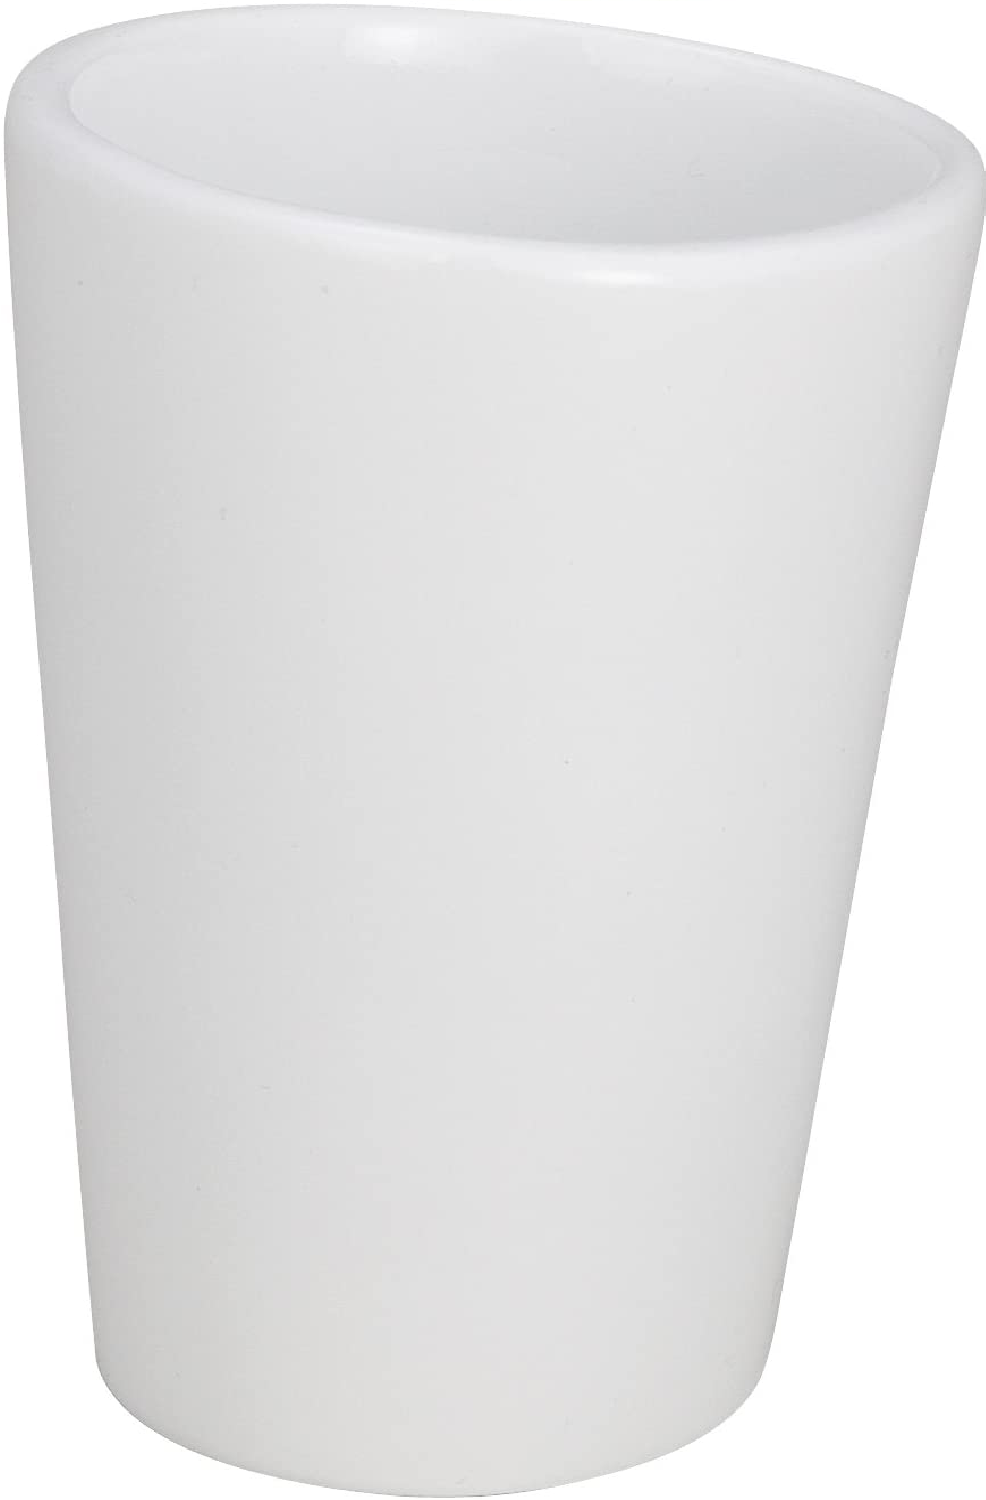 Zahnputzbecher Pebble Stone White - Zahnbürstenhalter, Polyresin, 8.8 x 10.7 x 7.8 cm, Weiß